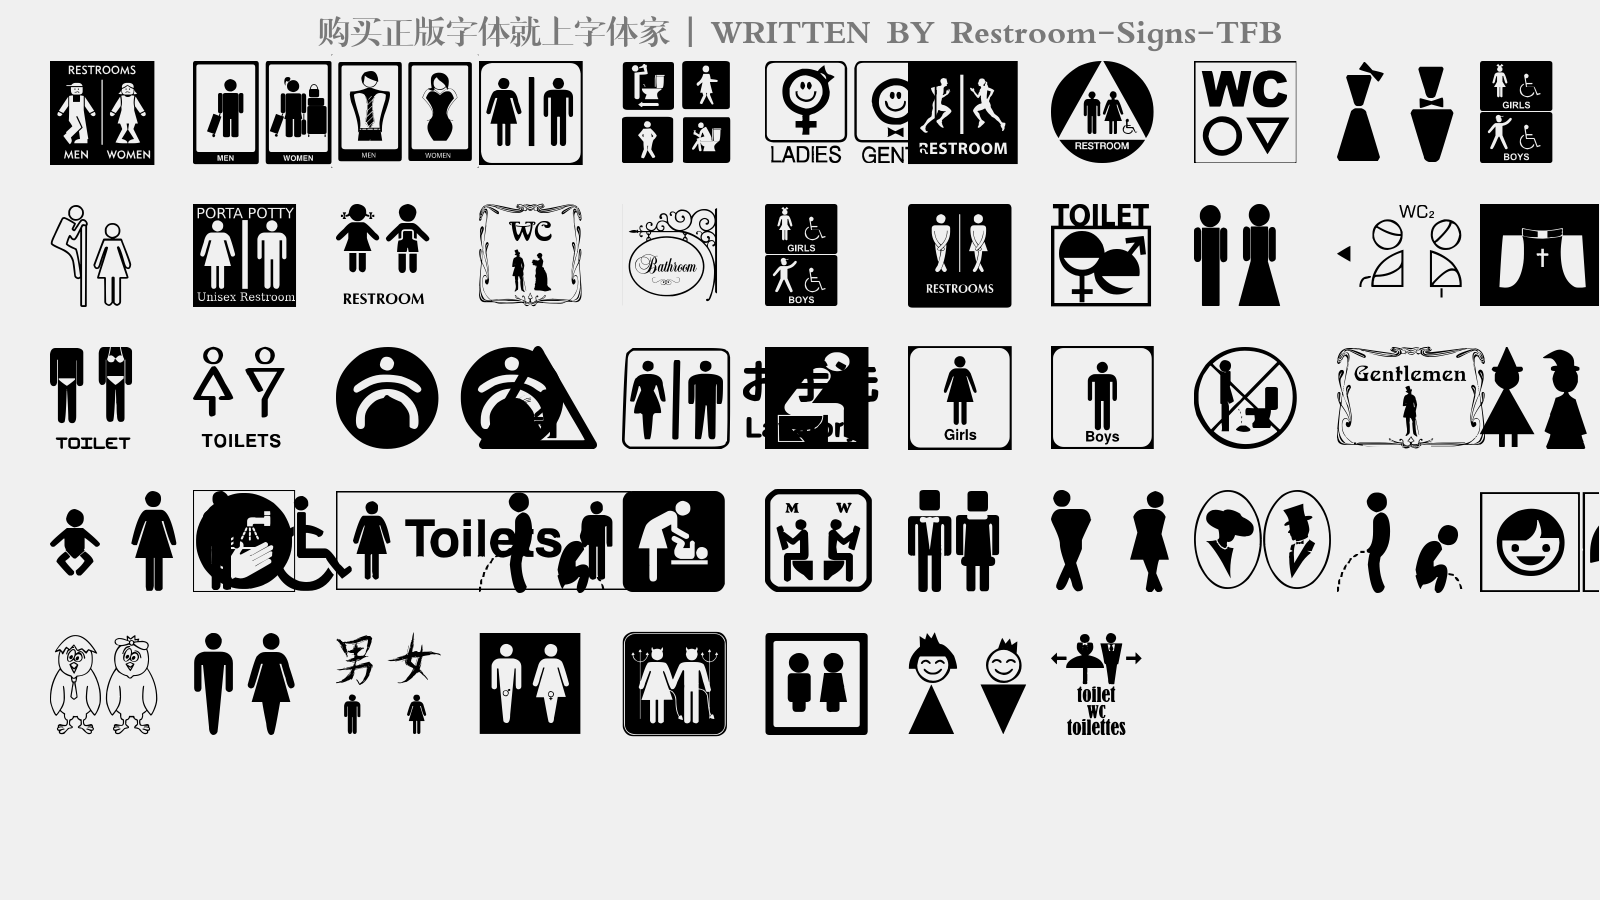 Restroom-Signs-TFB - 大写字母/小写字母/数字